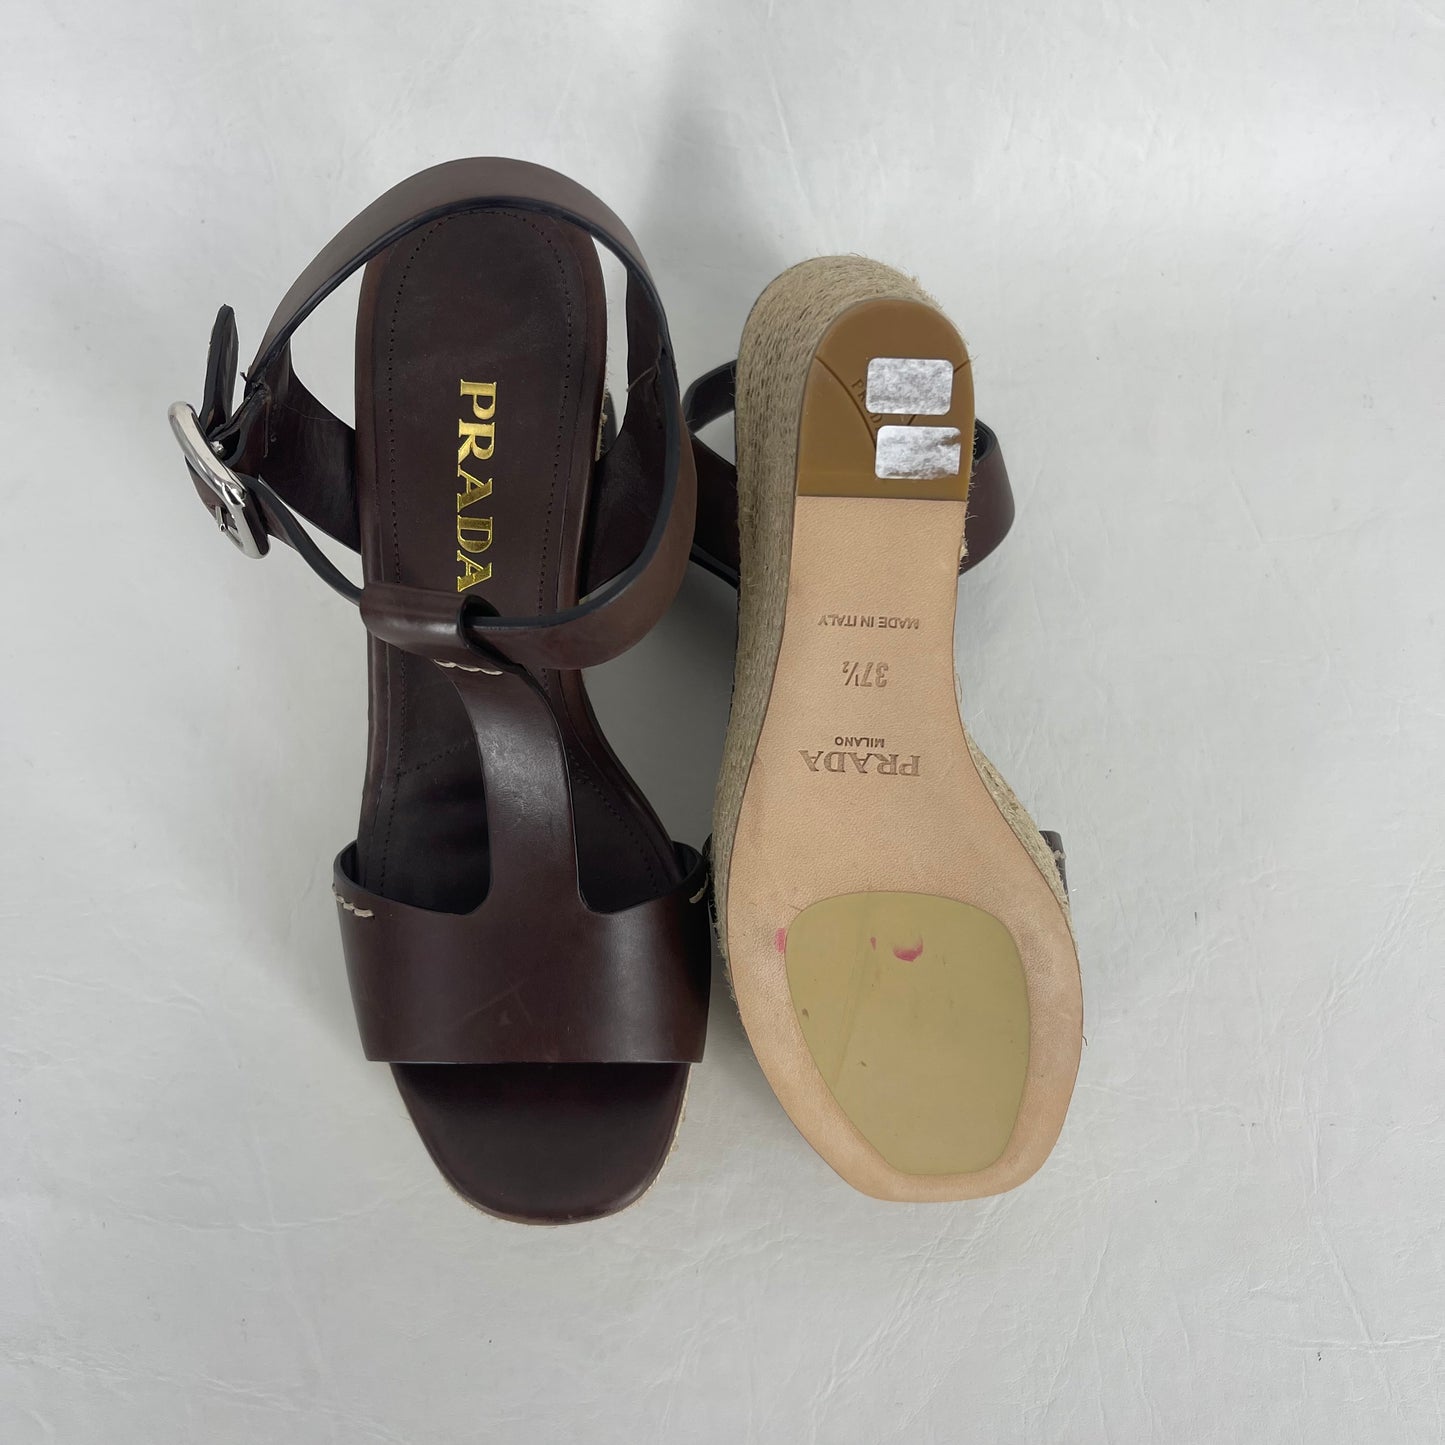 Authentic Prada Brown Wedge Sandals Sz 37.5